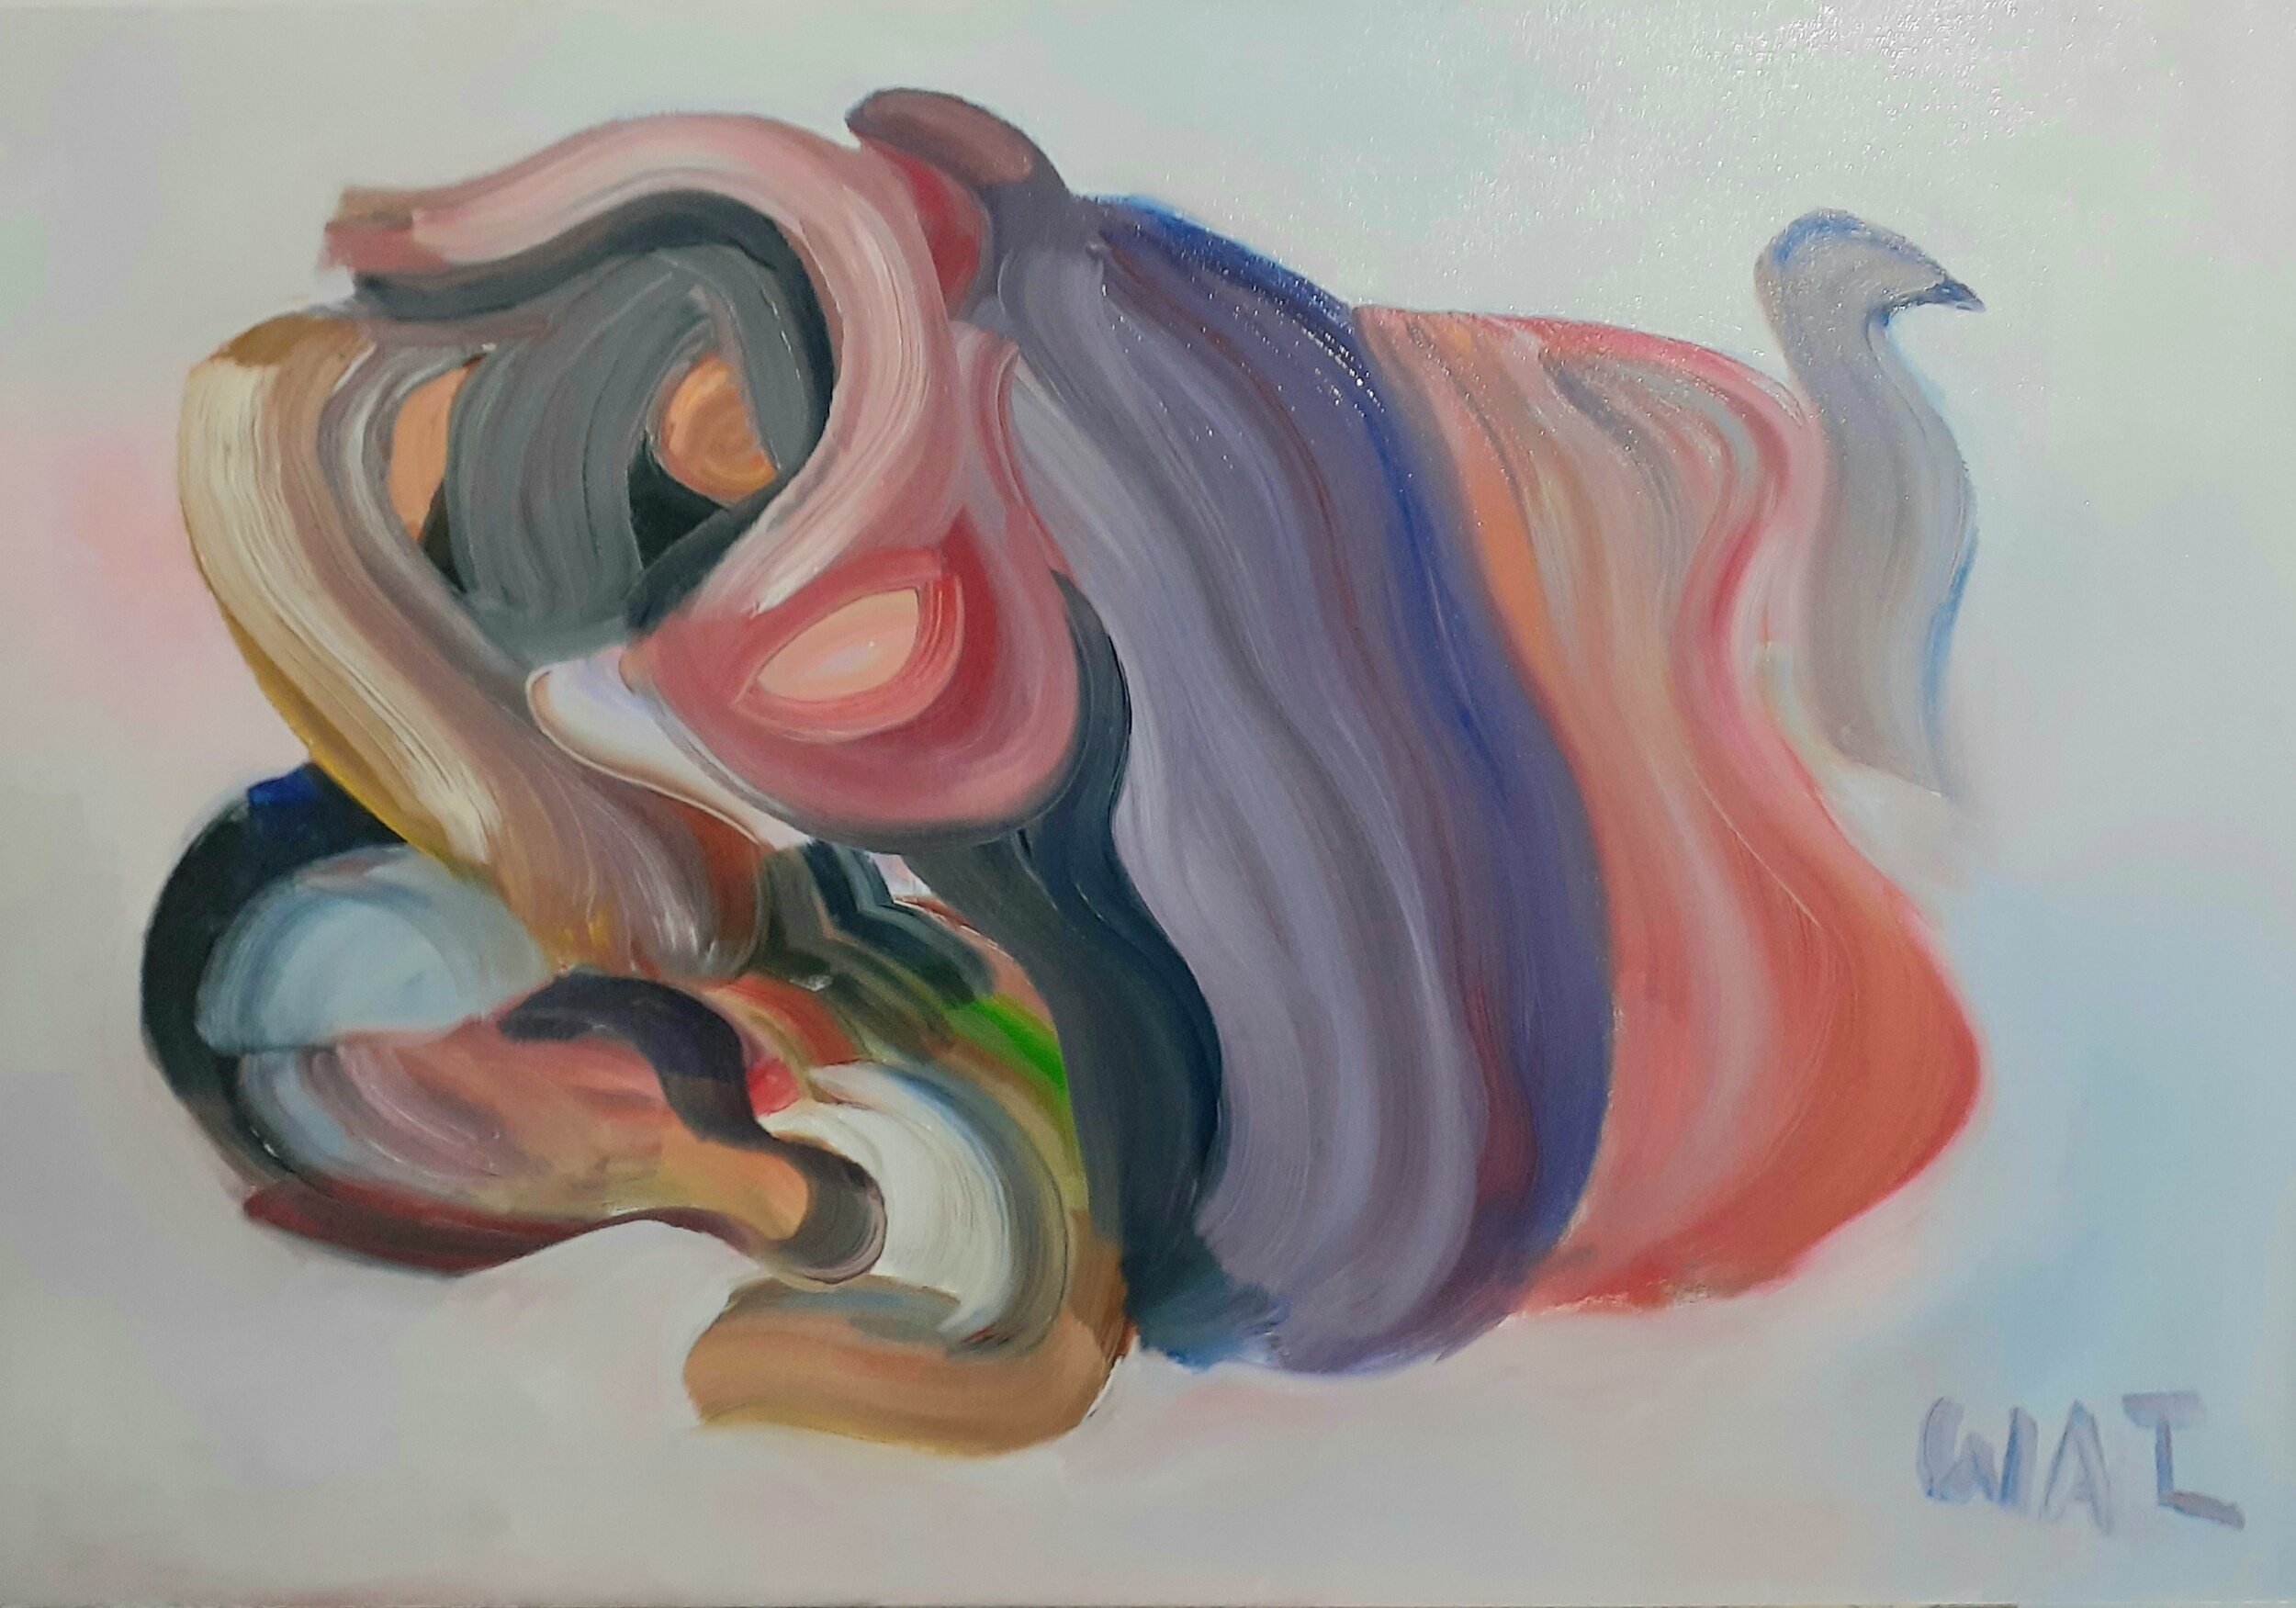   Untitled, oil on panel, 24” x 36”, 2021  